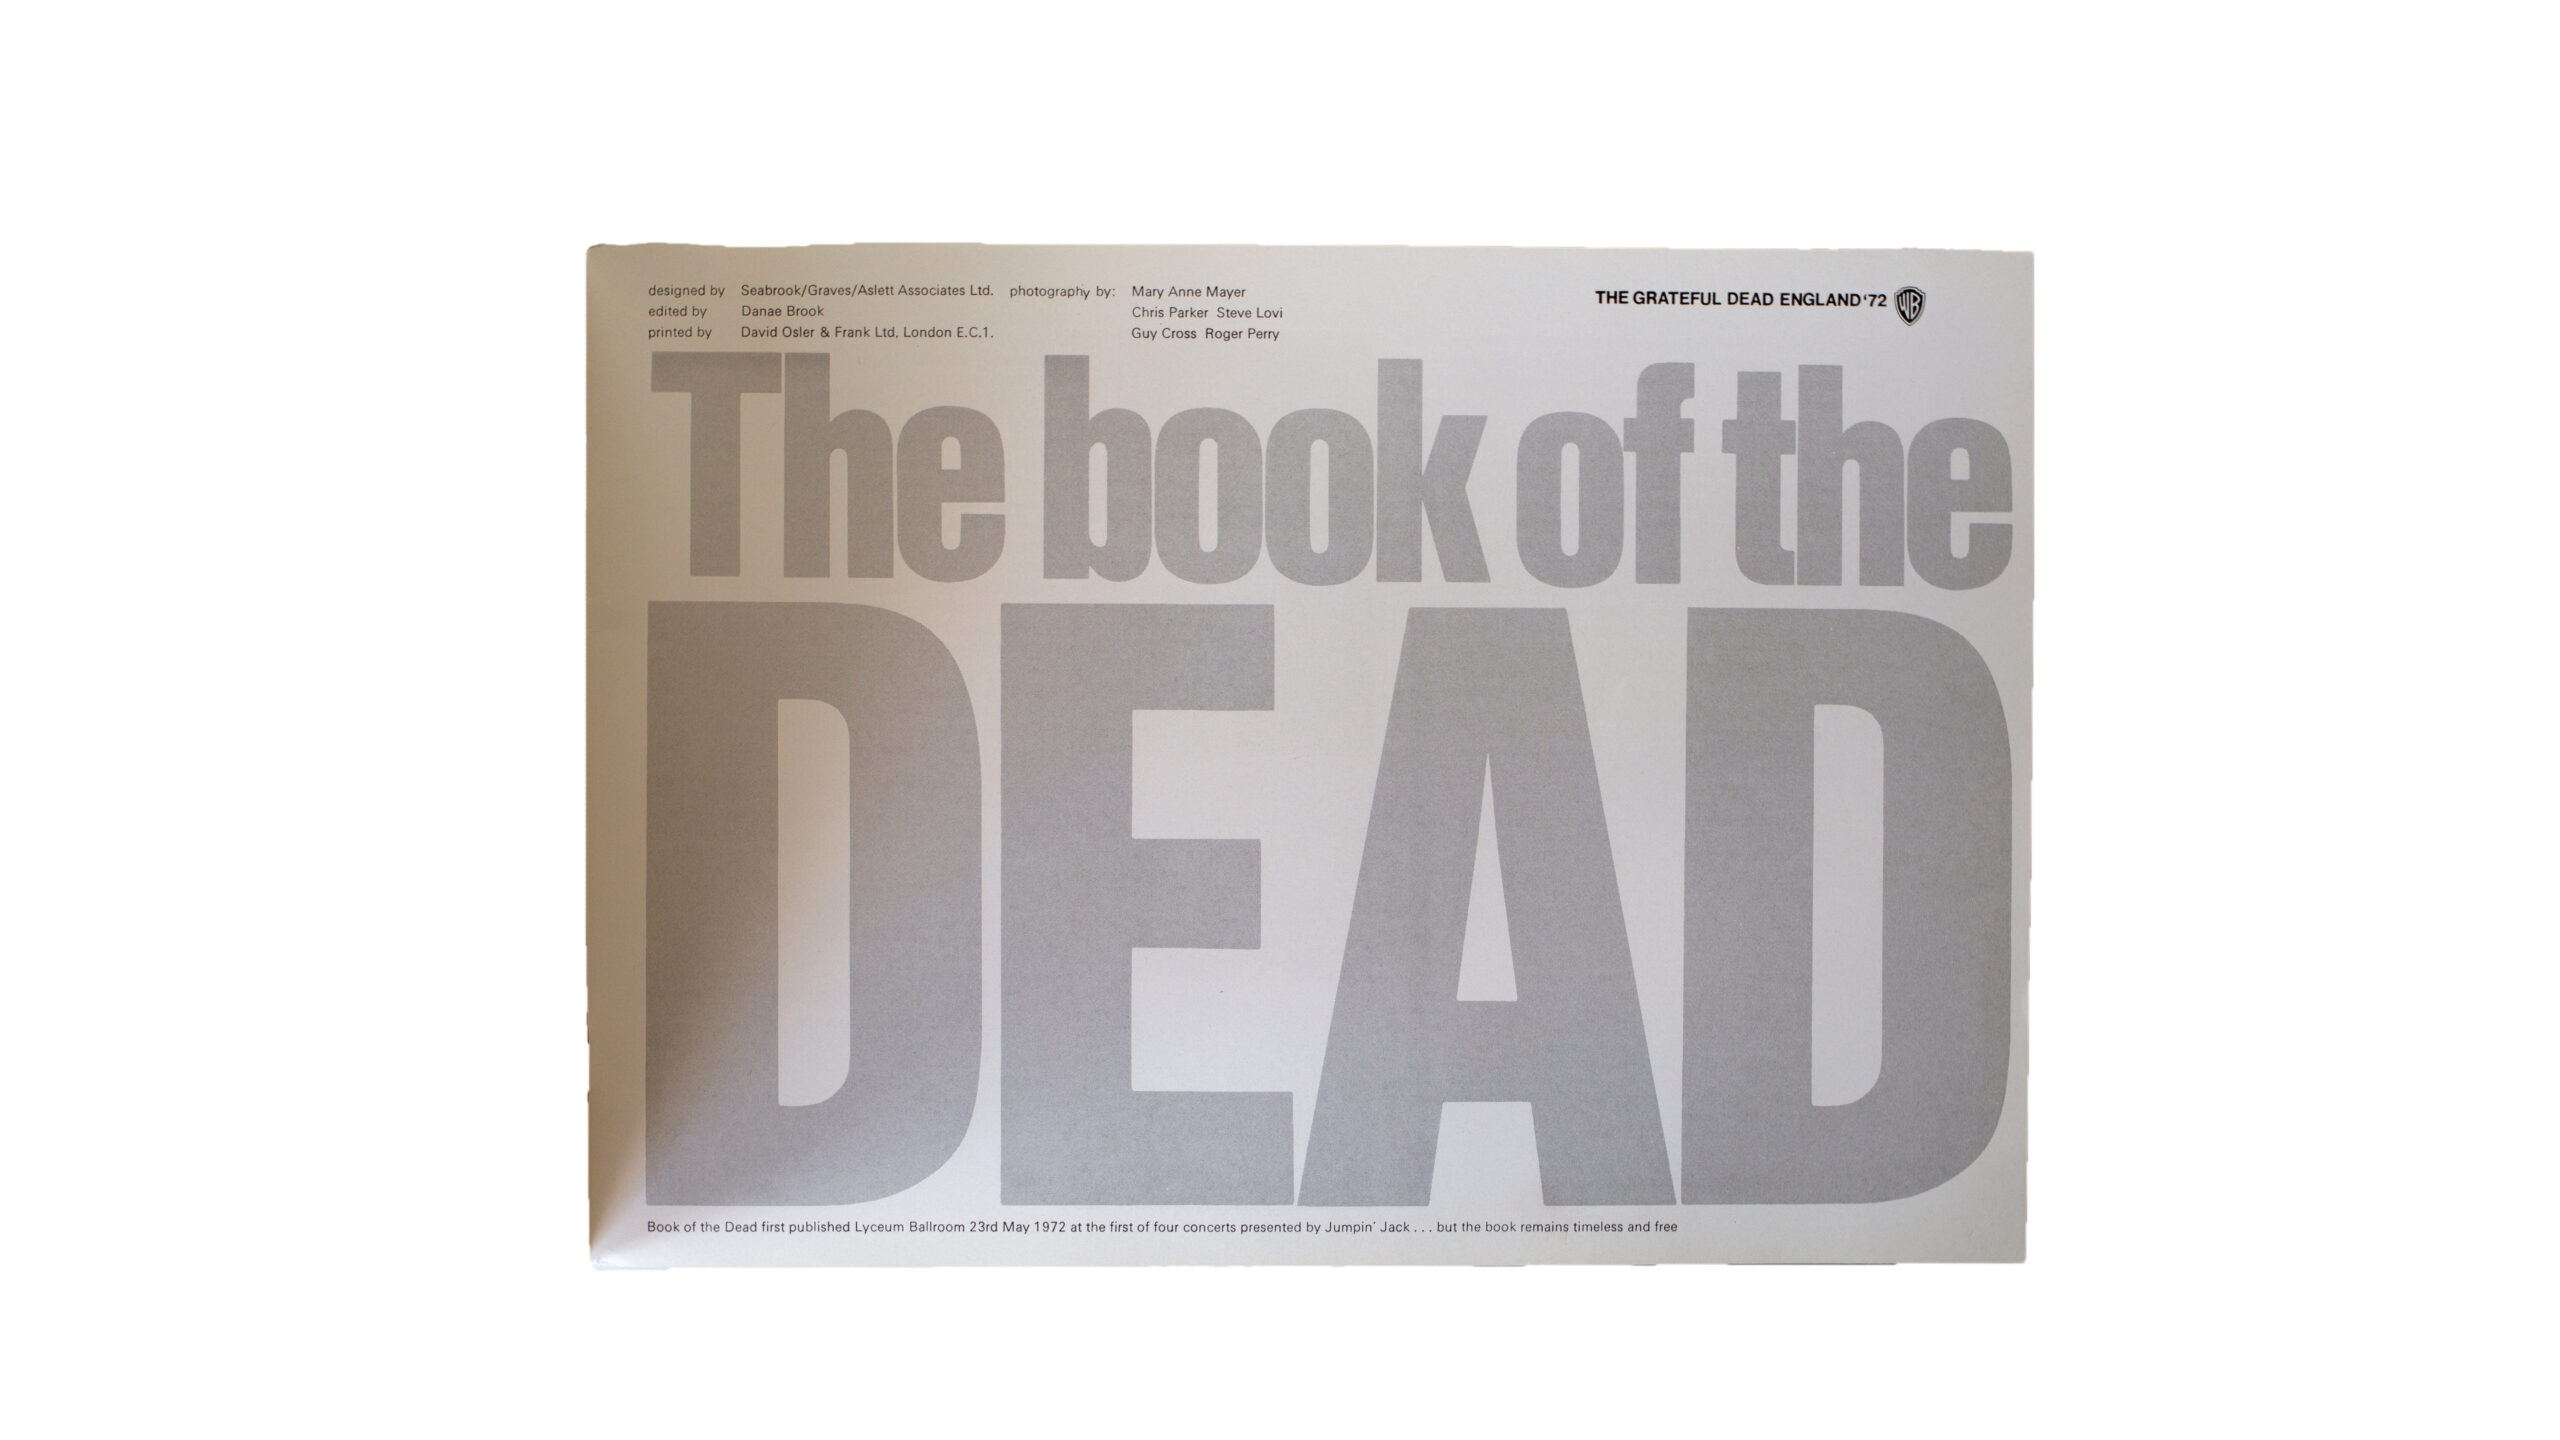 Grateful Dead, The -- Book of the Dead [Program]